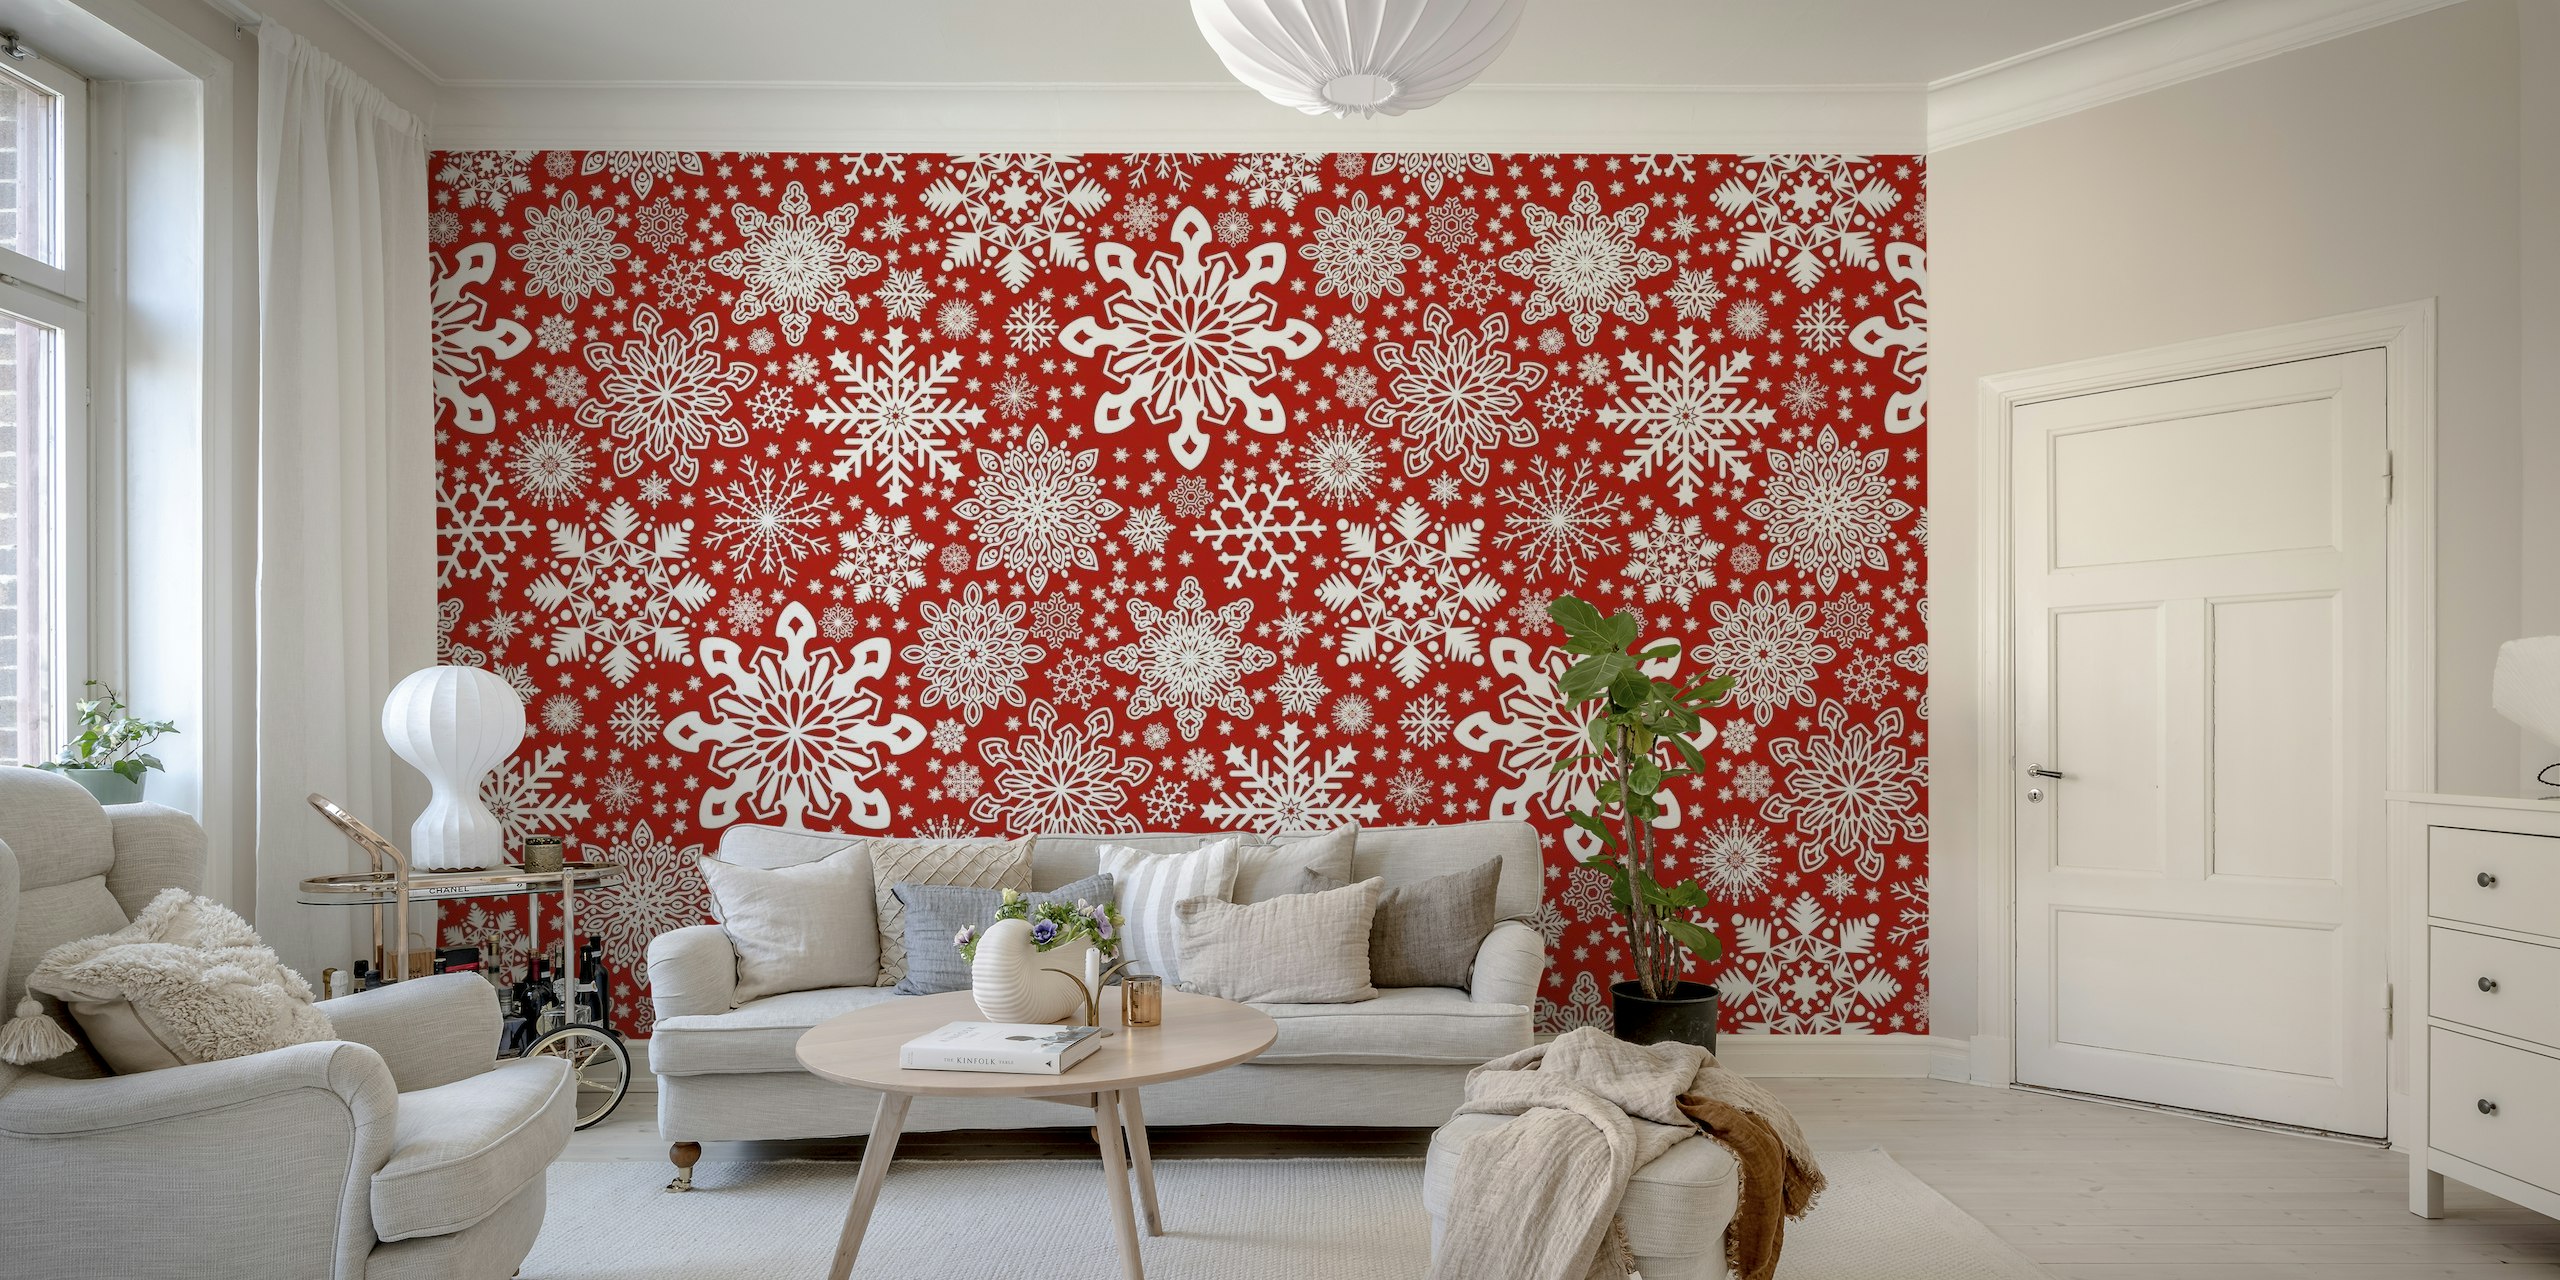 Snowflakes Design 1 wallpaper